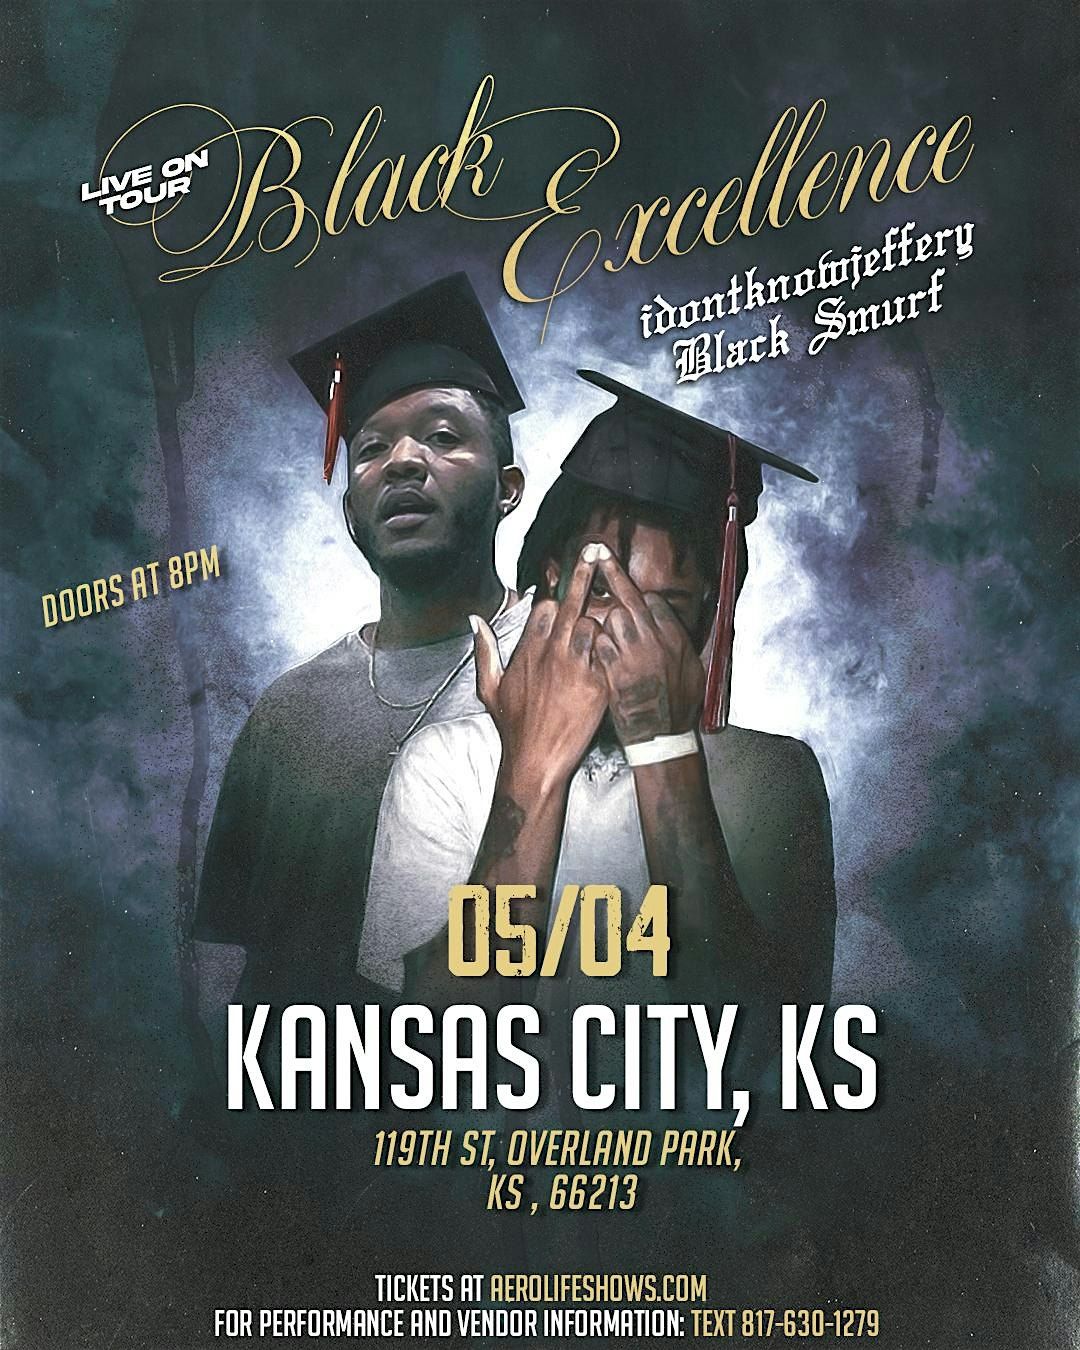 JULY 26th: IDONTKNOWJEFFERY & Black Smurf Live in Kansas City, MO